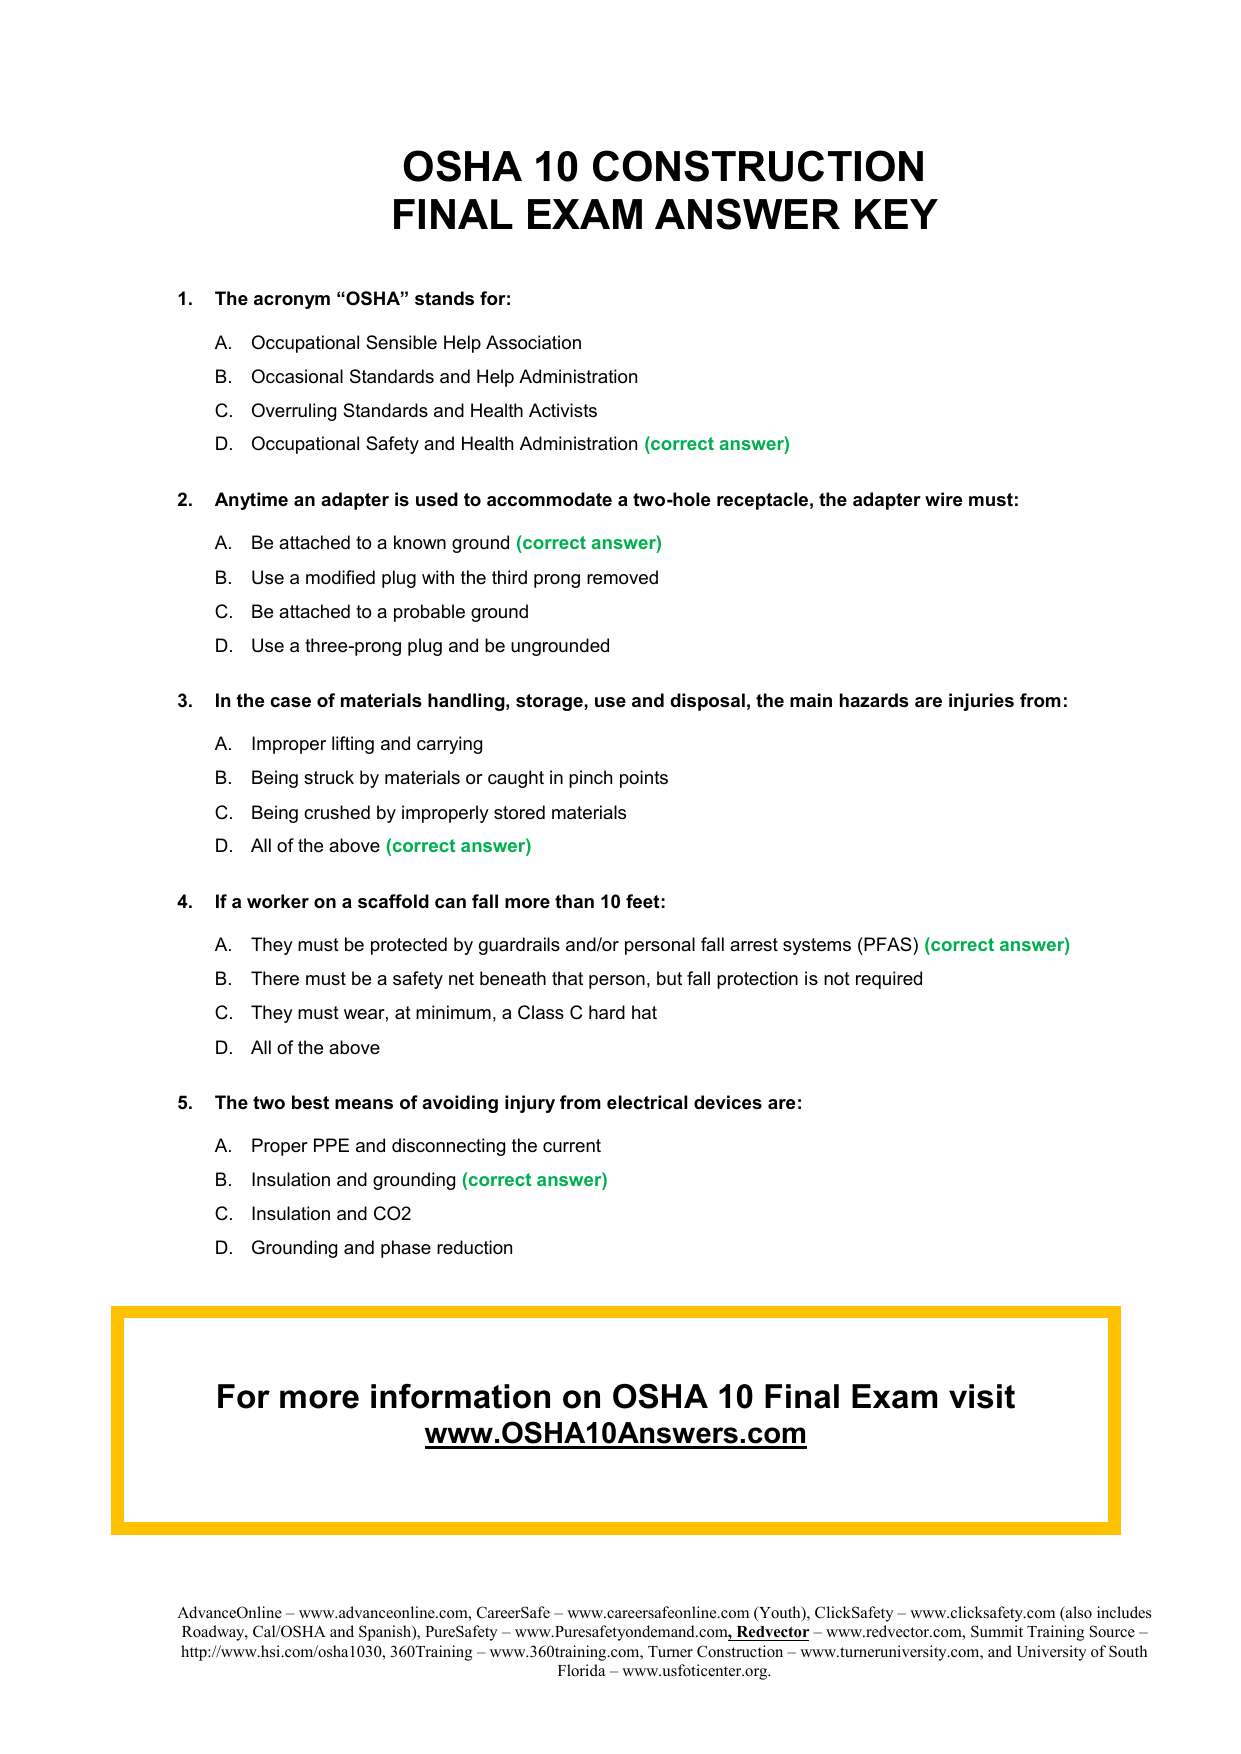 OSHA 10 Construction Final Test Answer Key